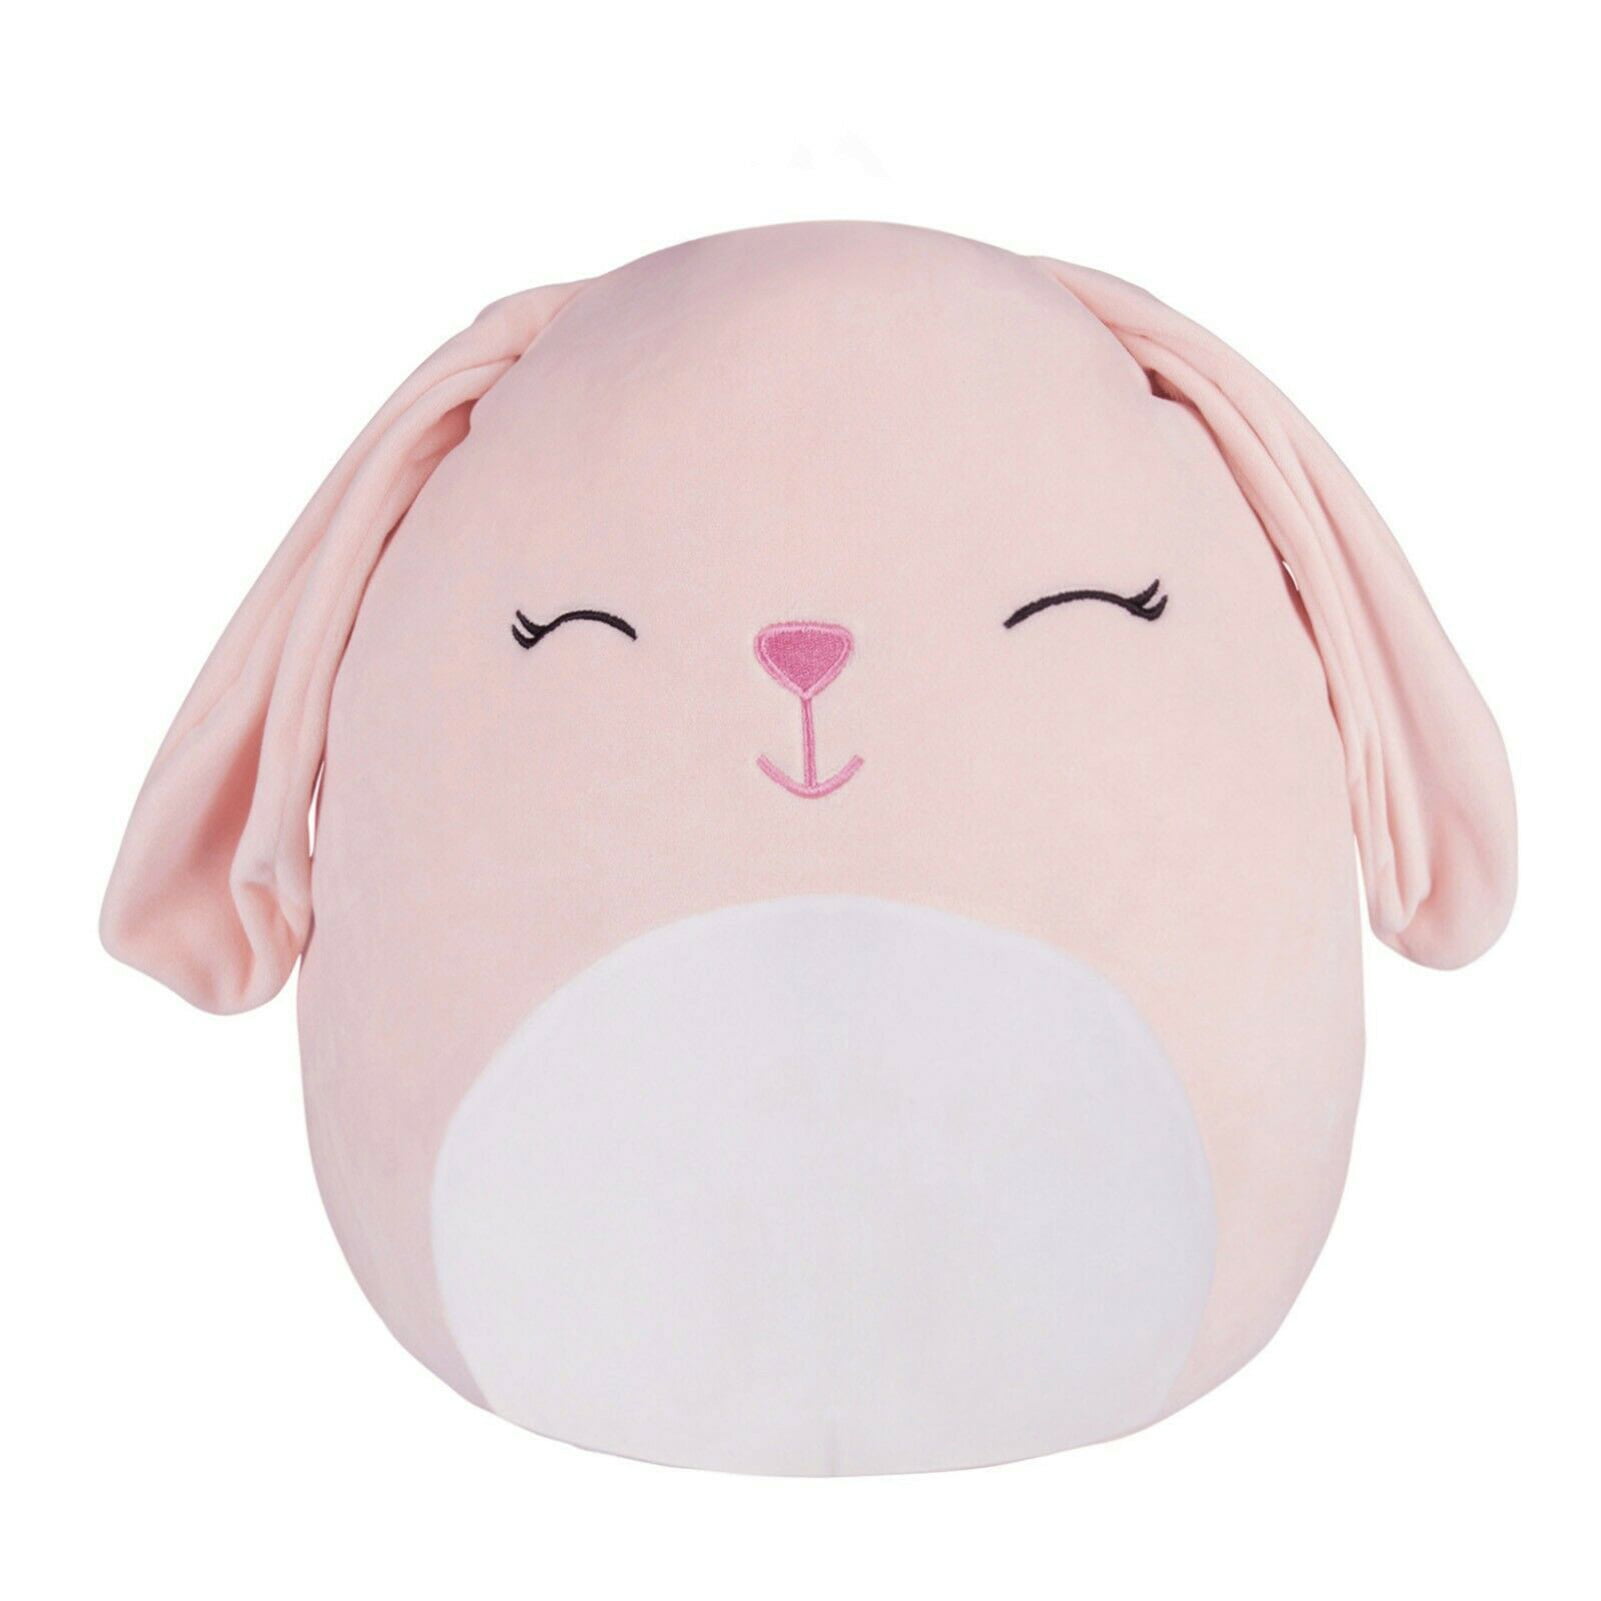 New Bunny Rabbit Large Soft Stuffed Animal Baby Girl Kid Pink Pillow Plush Toy 